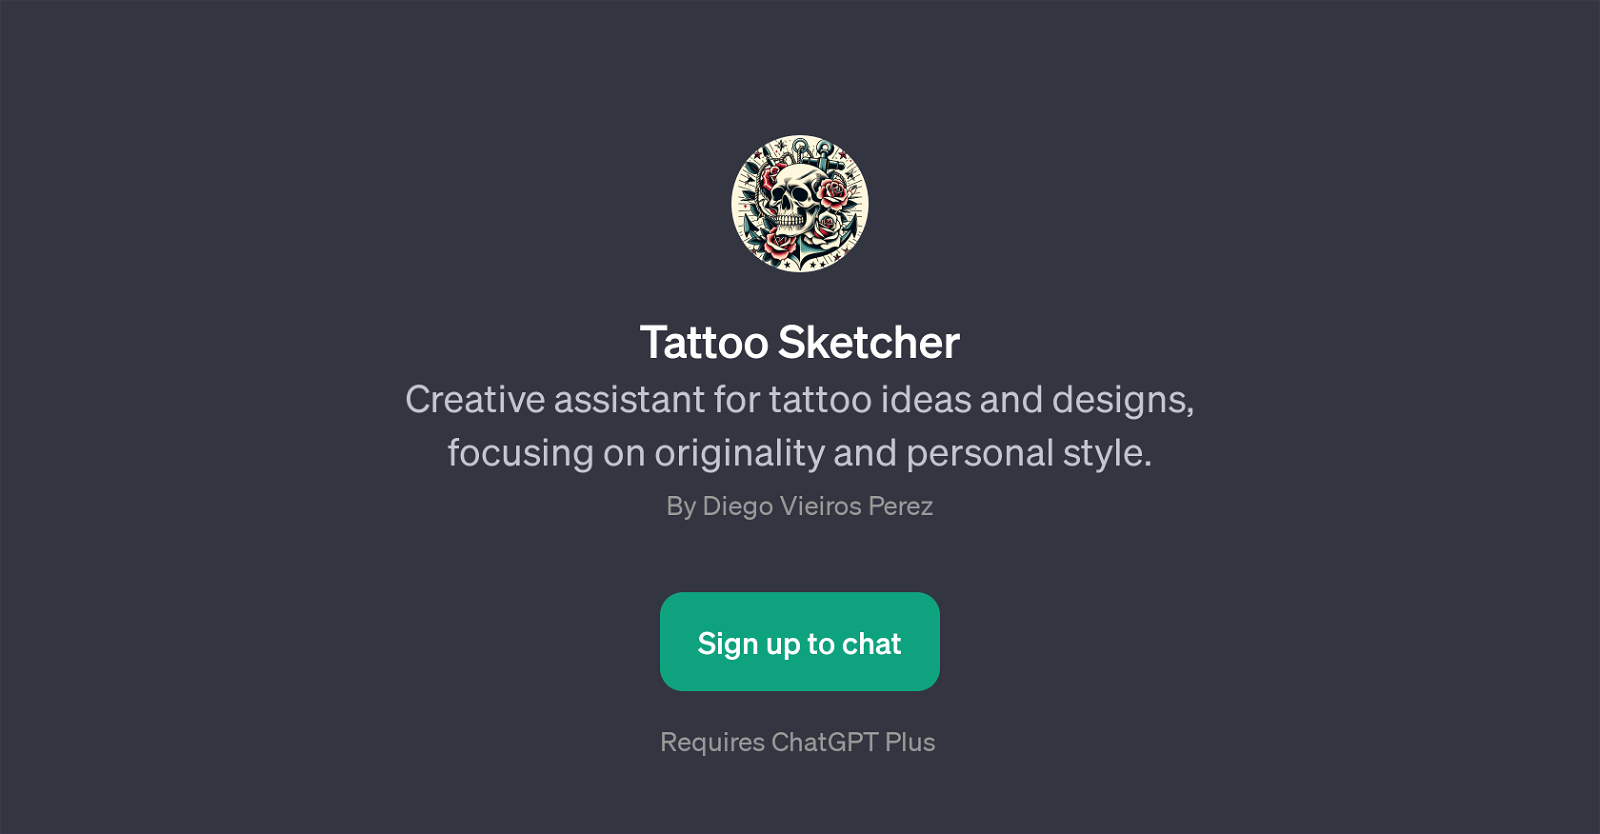 Tattoo Sketcher website